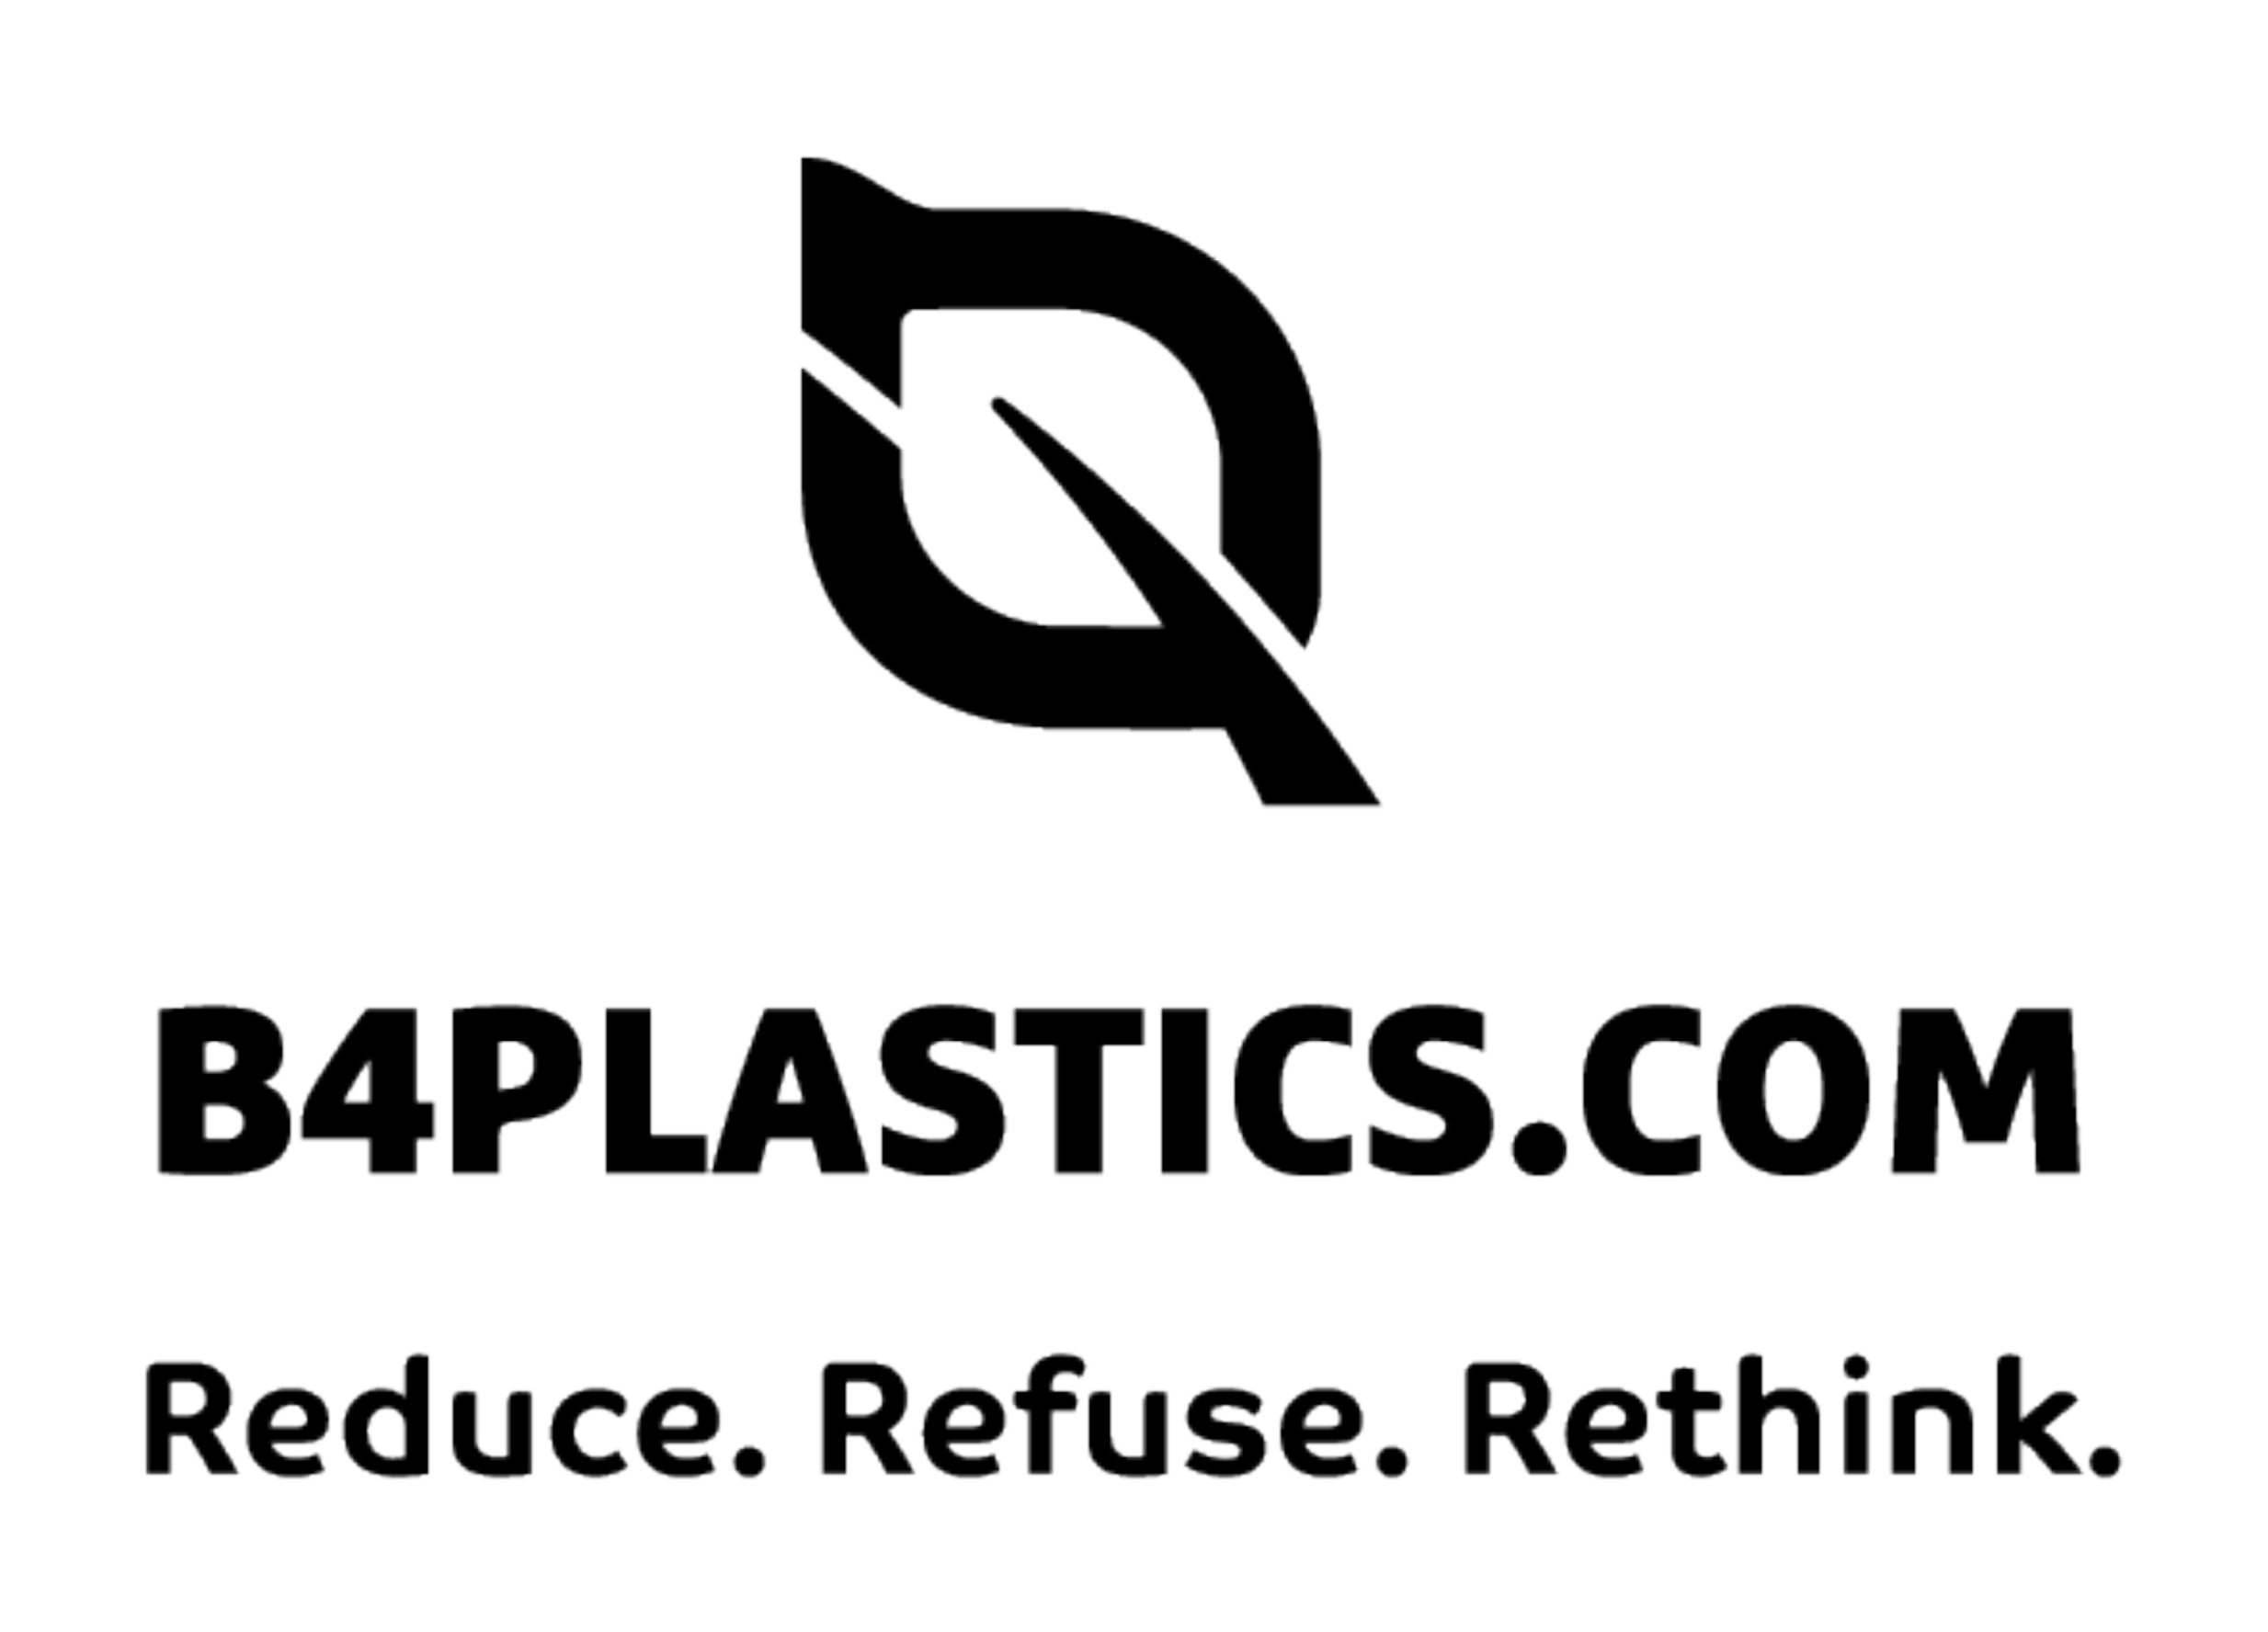 B4plastics